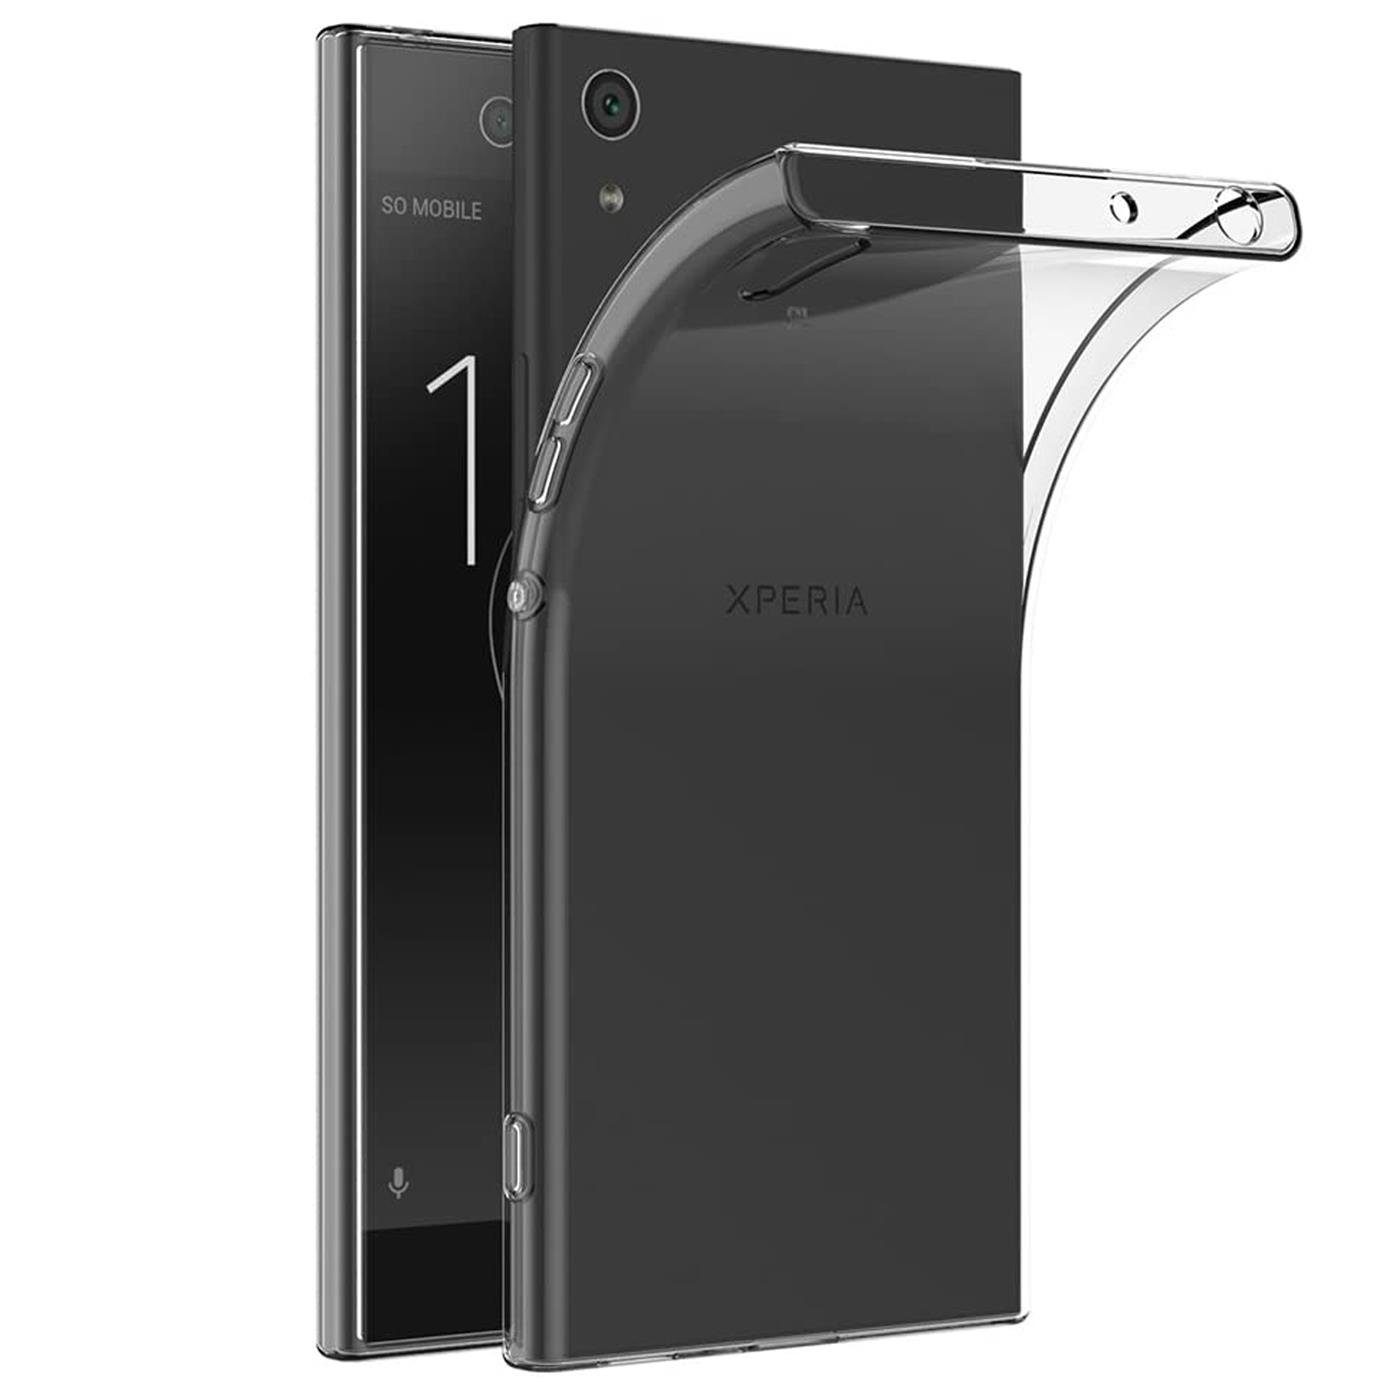 CoolGadget Handyhülle Transparent Ultra Slim Case für Sony Xperia XA1 Ultra 6 Zoll, Silikon Hülle Dünne Schutzhülle für Sony XA1 Ultra Hülle